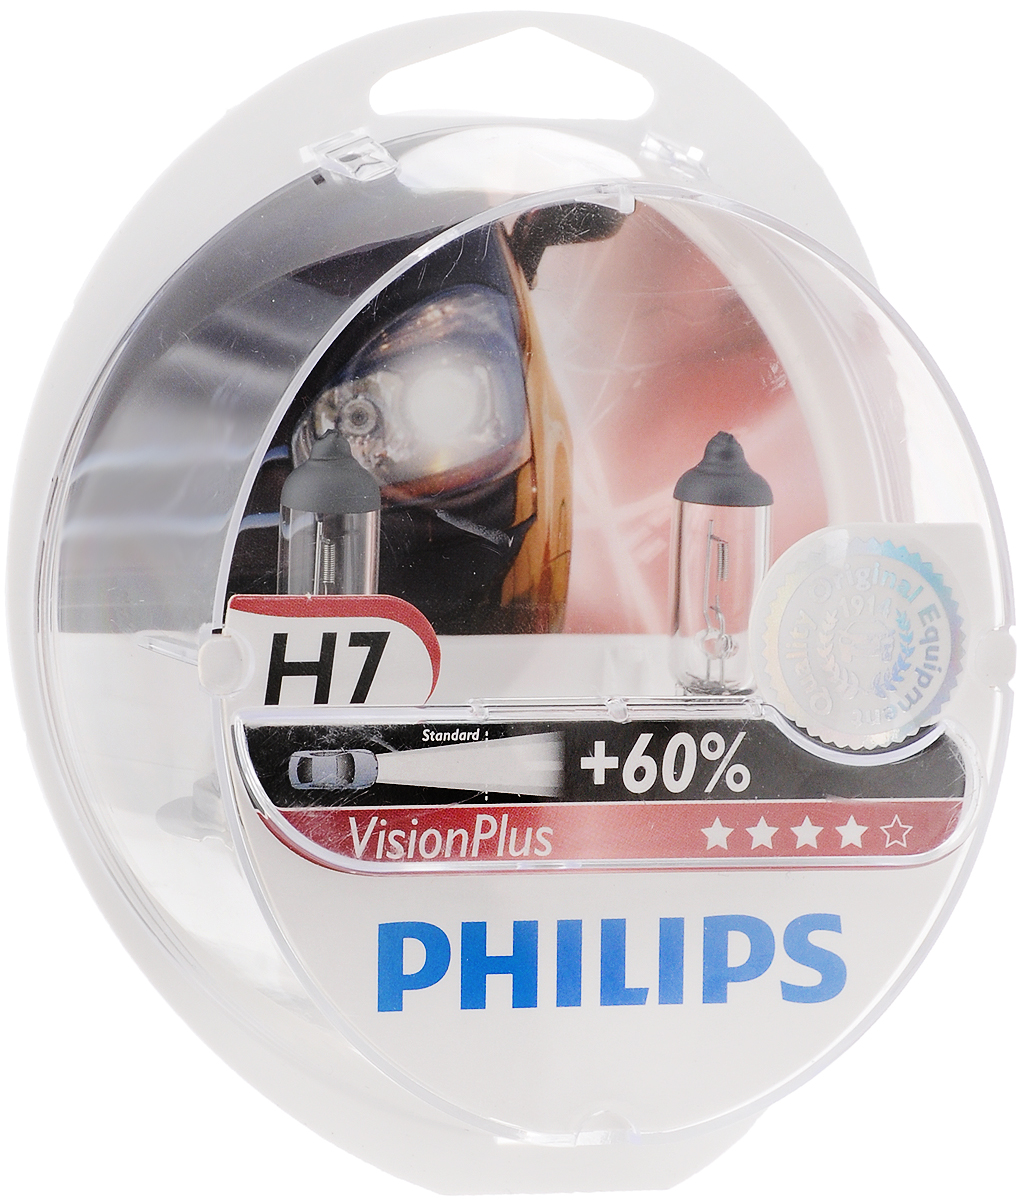 Philips vision купить. Philips Vision Plus 12972vps2 h7 55w. Philips h7 Vision Plus +60. Philips Vision Plus px26d. Philips Vision Plus h7 12v 55w +60.